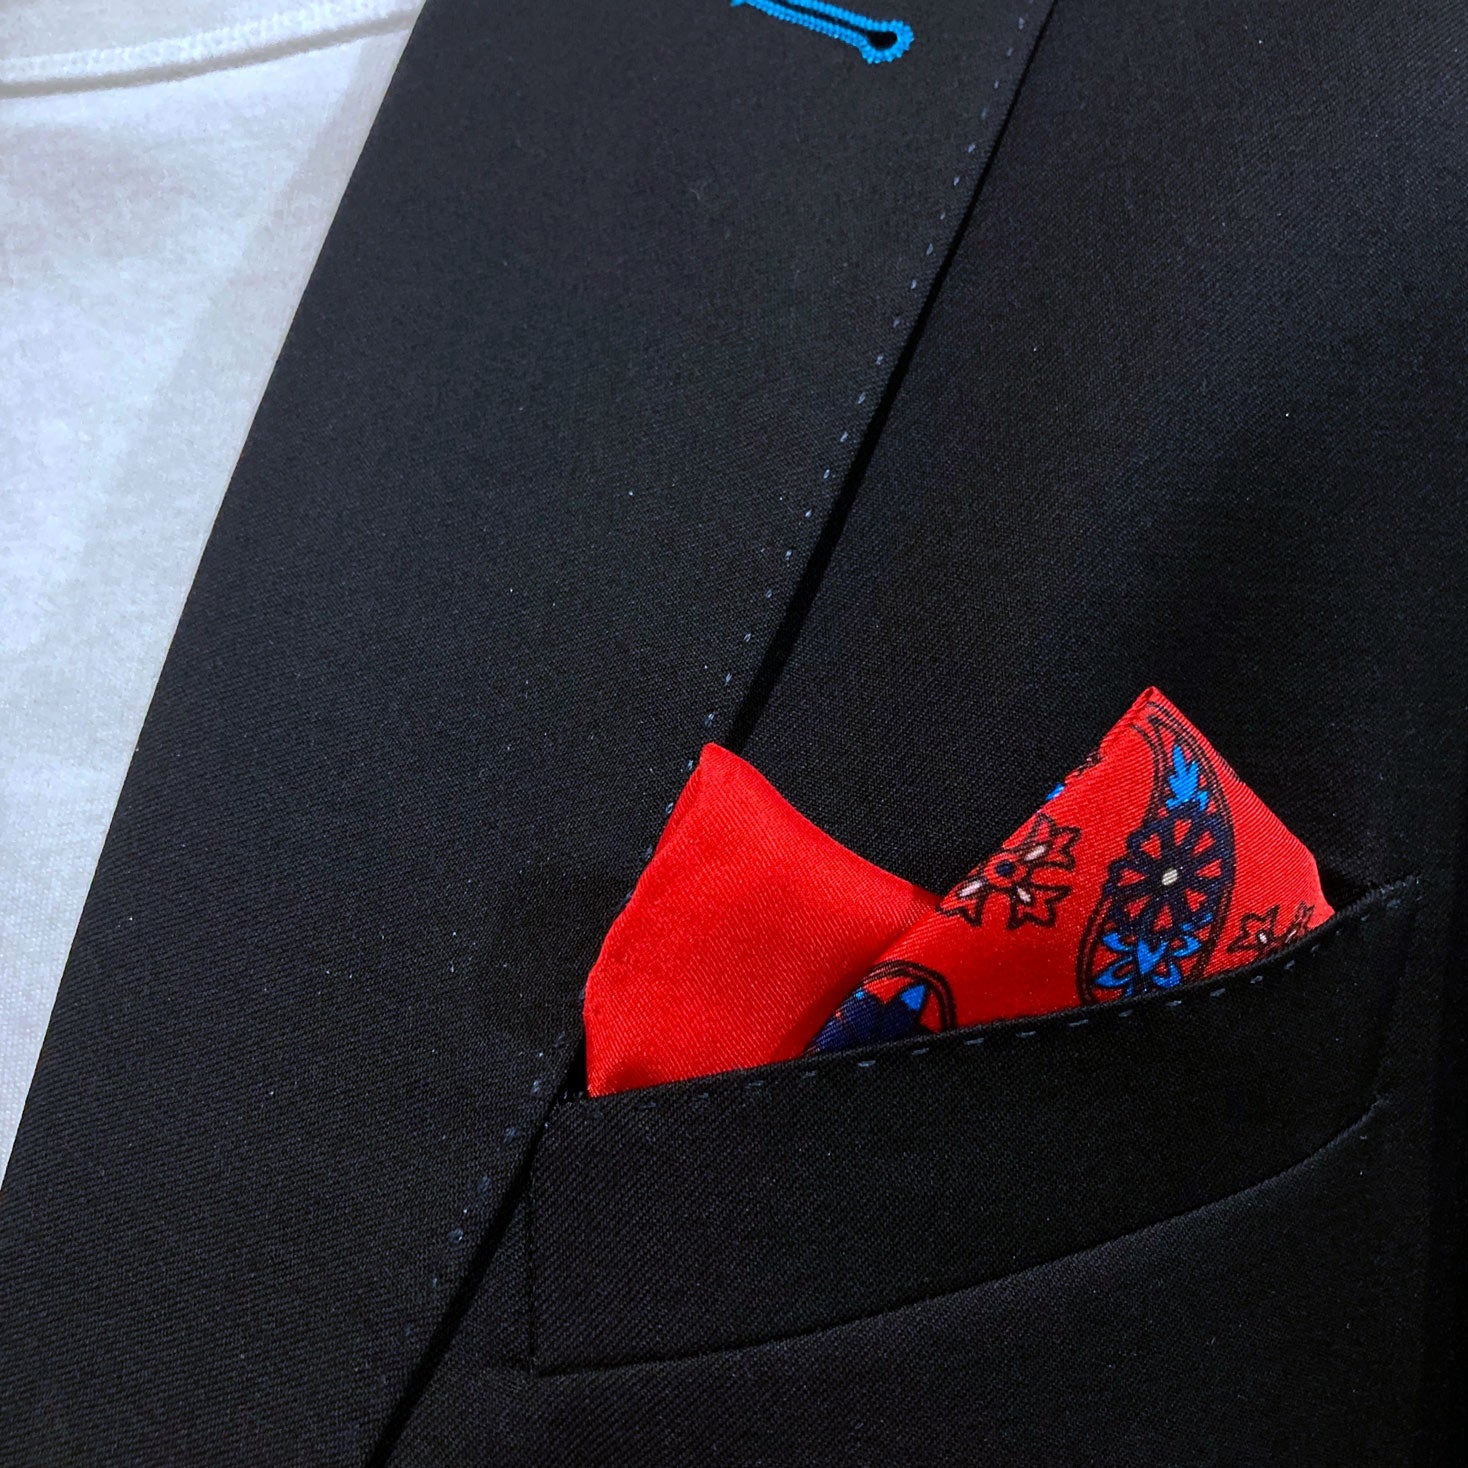 Close-up of 'Casablanca' silk pocket square in breast pocket of dark suit jacket.